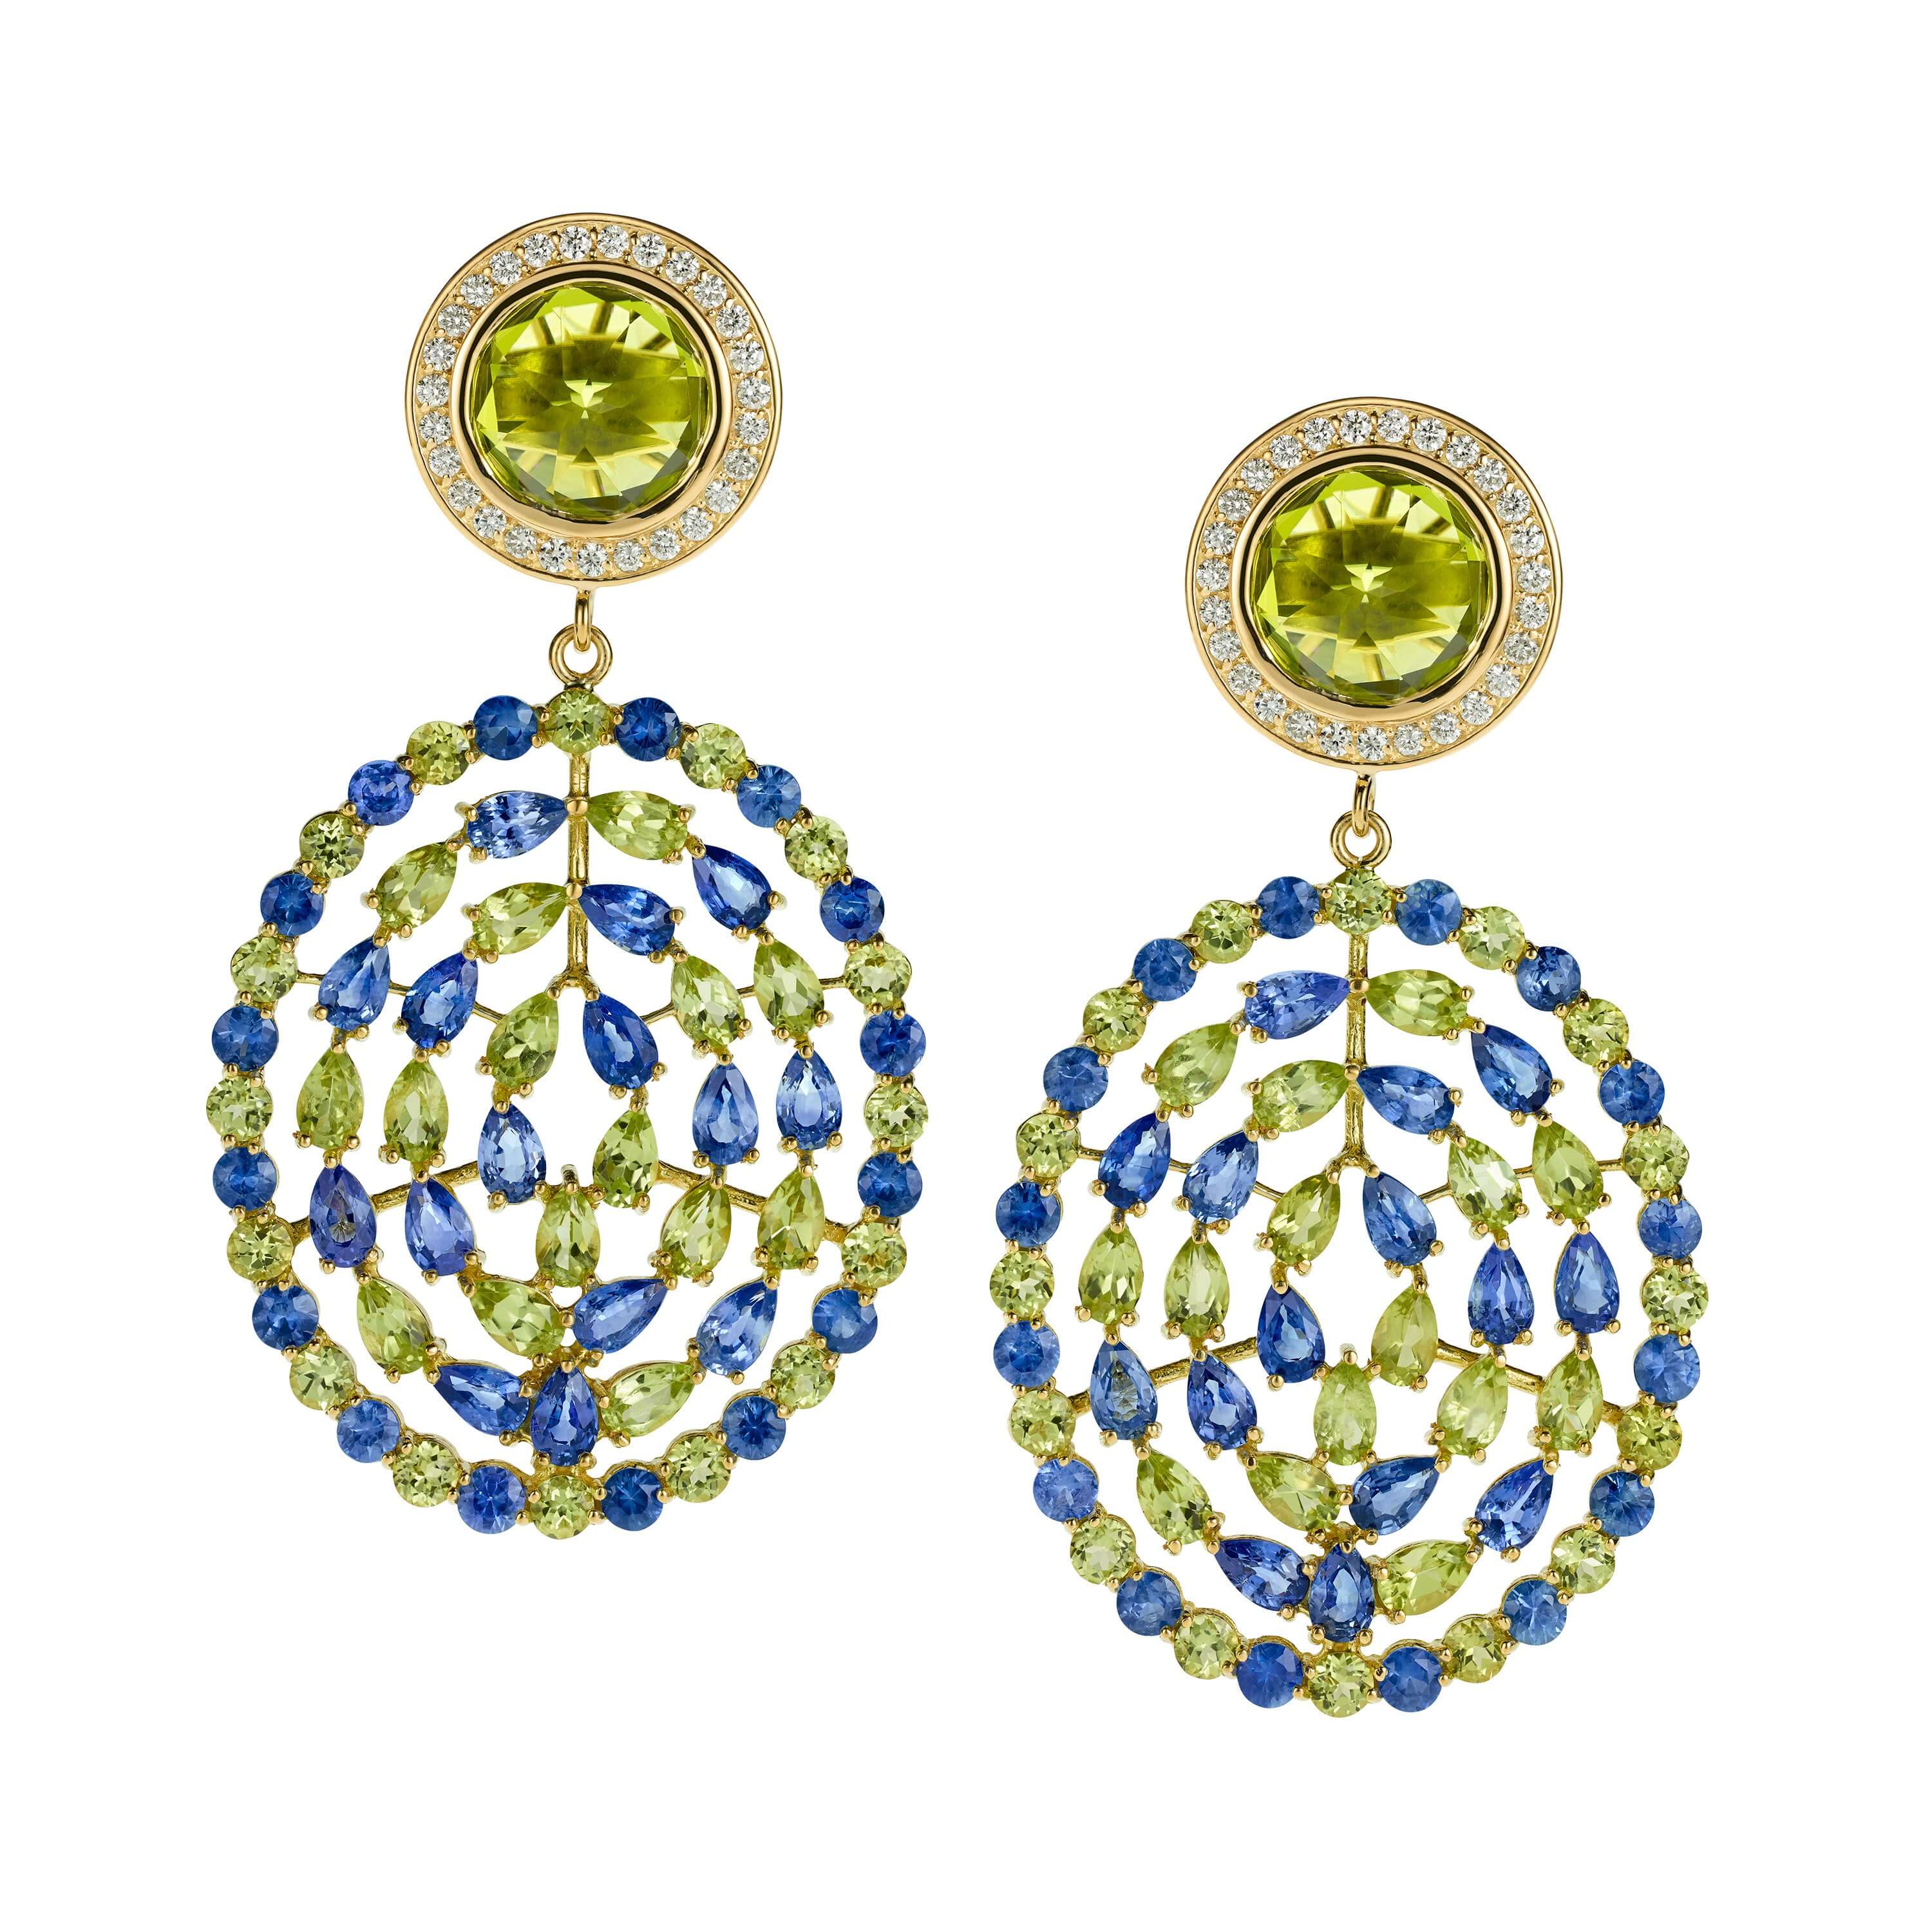 Peridot and Sapphire Earrings